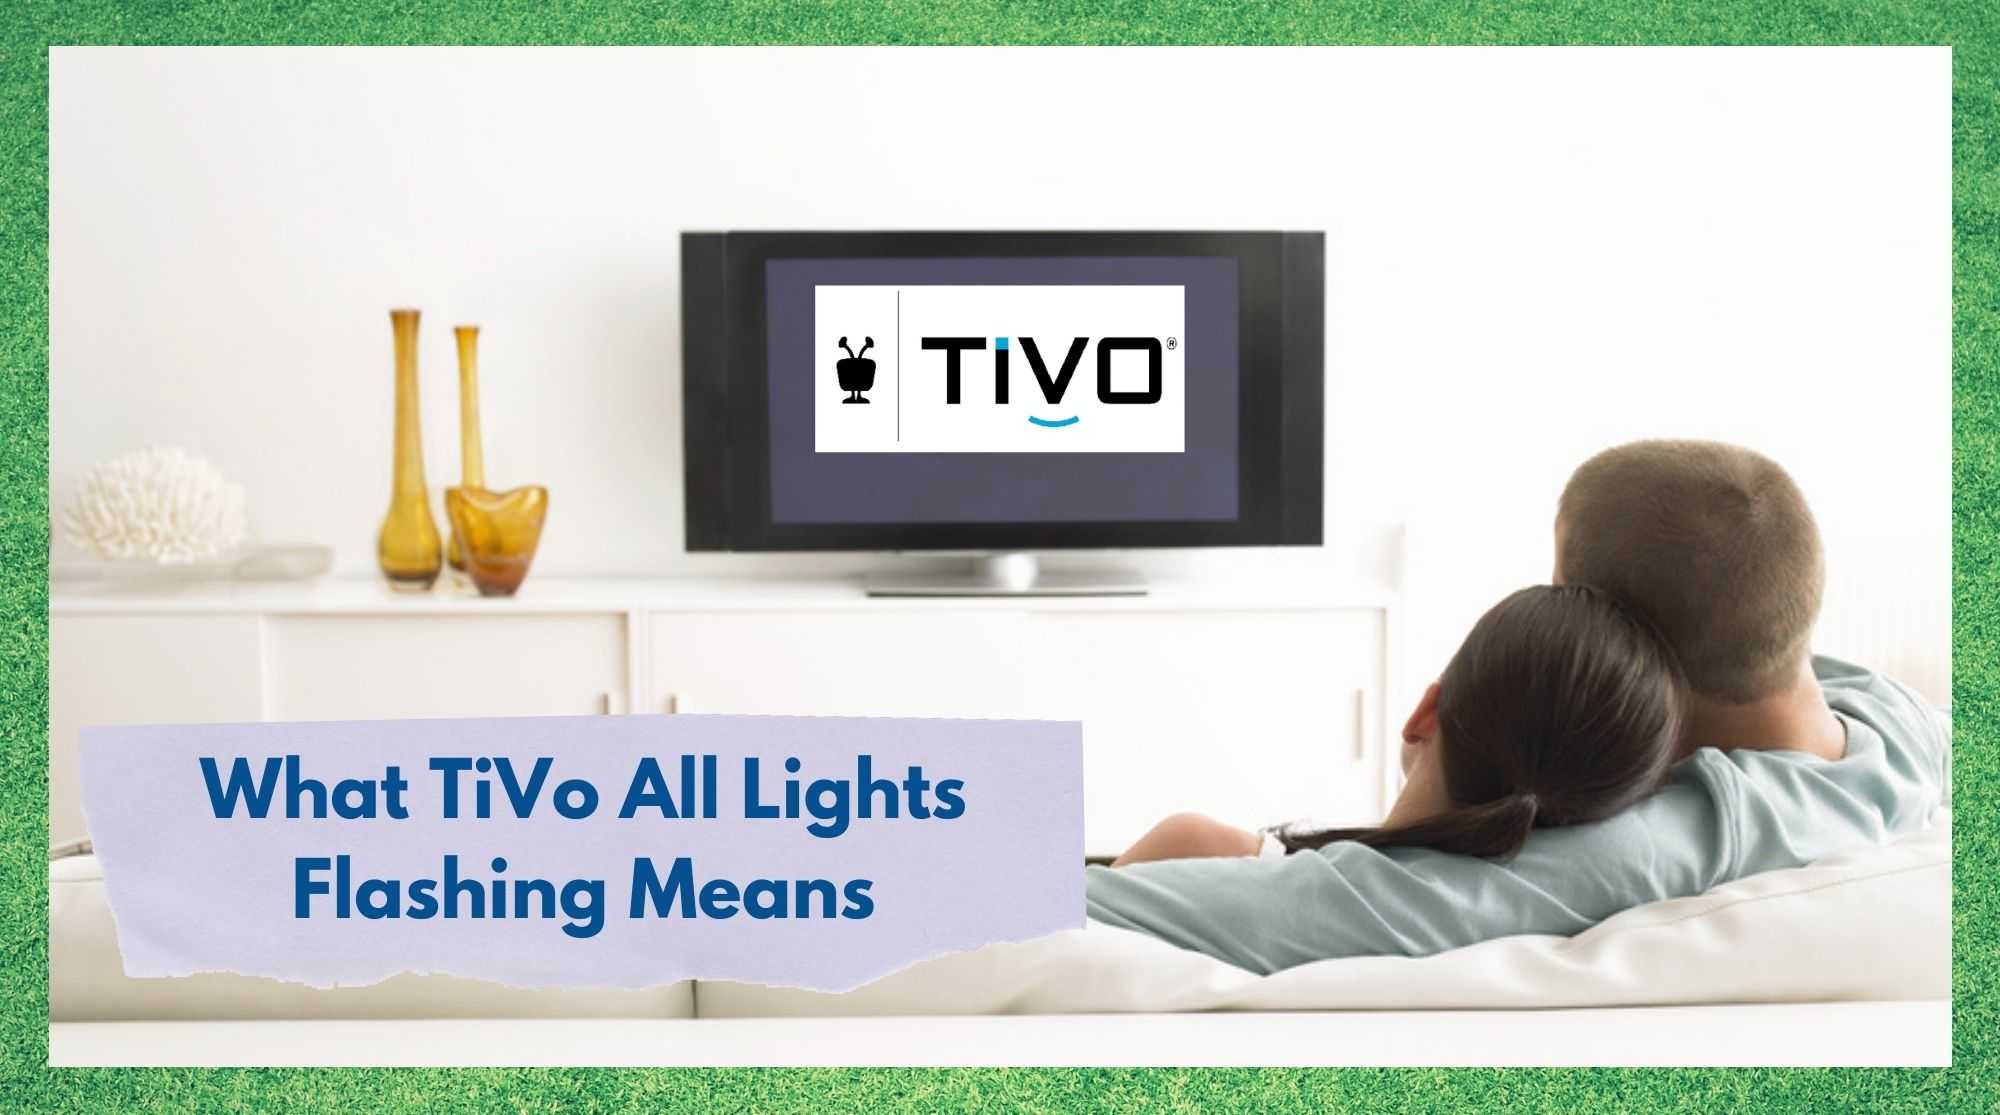 TiVo 'ਤੇ ਸਾਰੀਆਂ ਲਾਈਟਾਂ ਫਲੈਸ਼ ਹੋ ਰਹੀਆਂ ਹਨ: ਸੰਭਾਵੀ ਕਾਰਨ &amp; ਮੈਂ ਕੀ ਕਰਾਂ